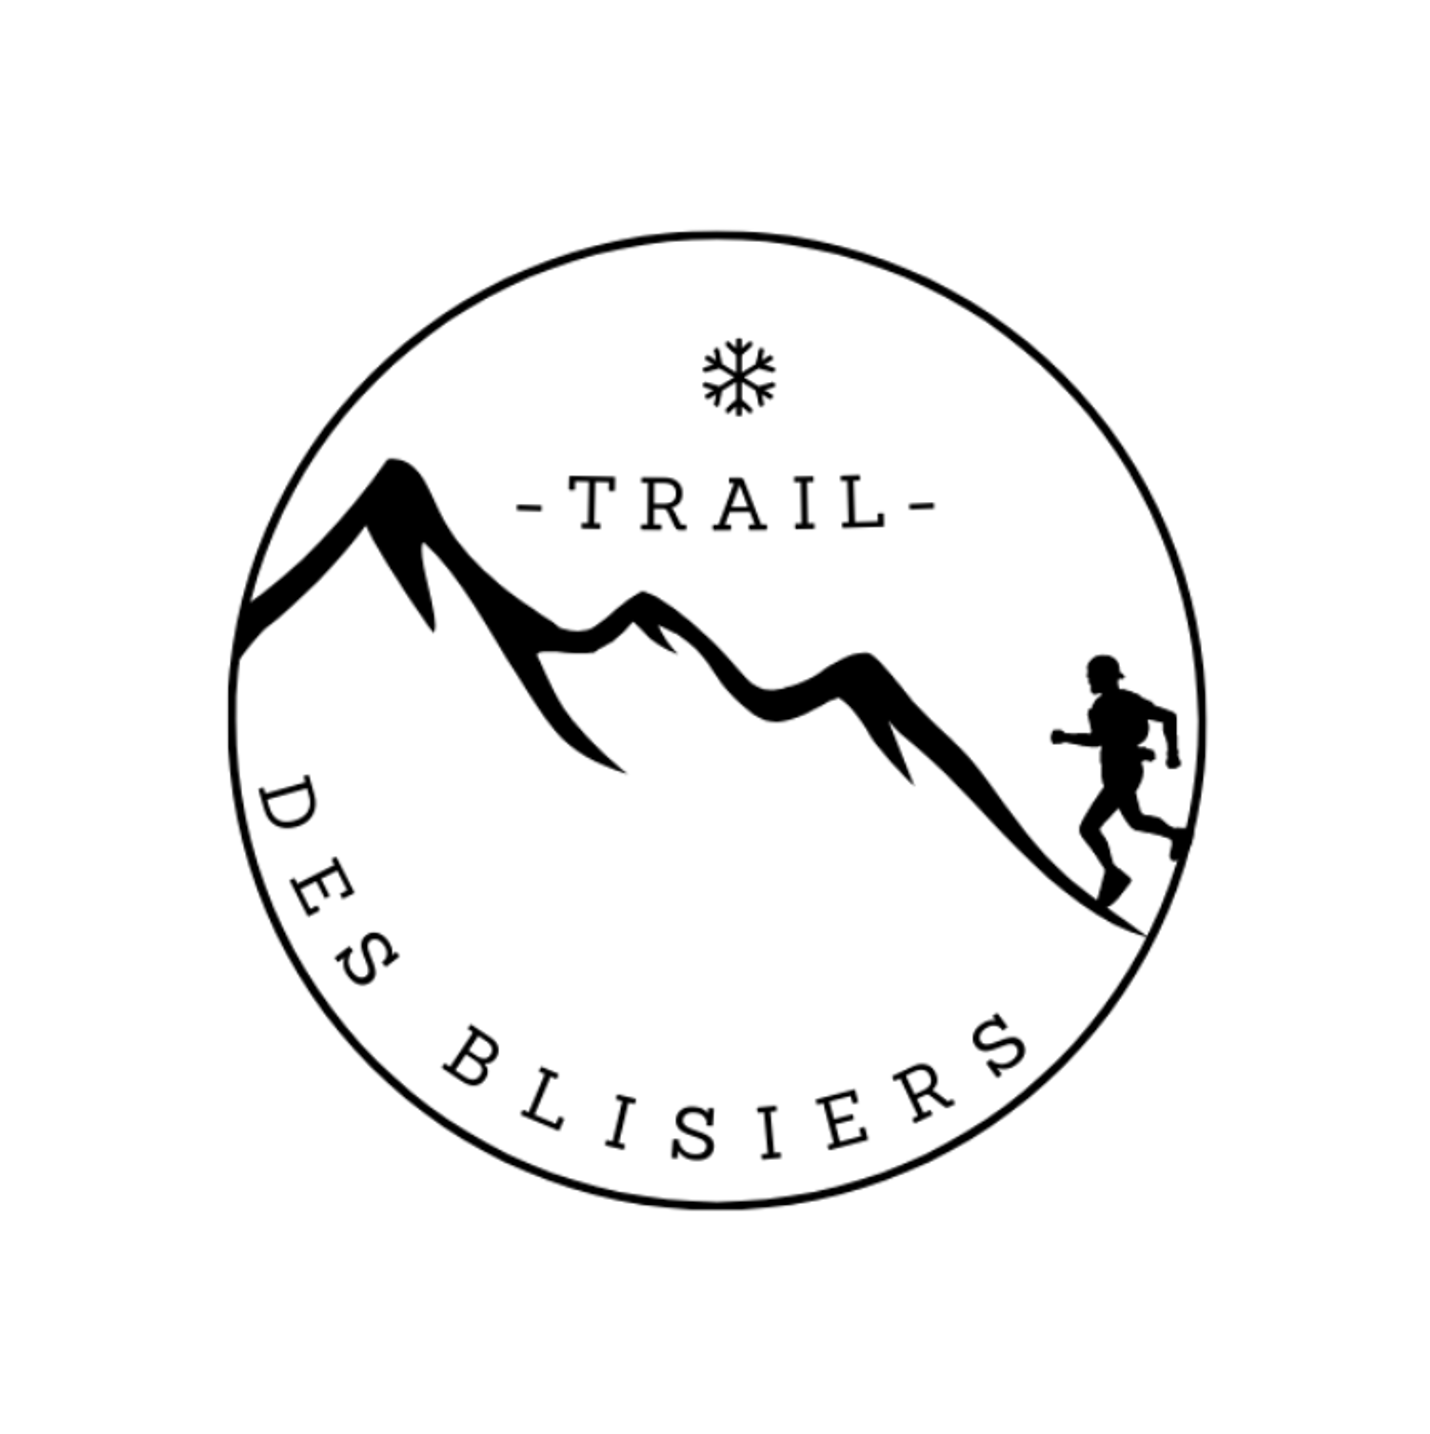 Logo-Trail-des-Blisiers